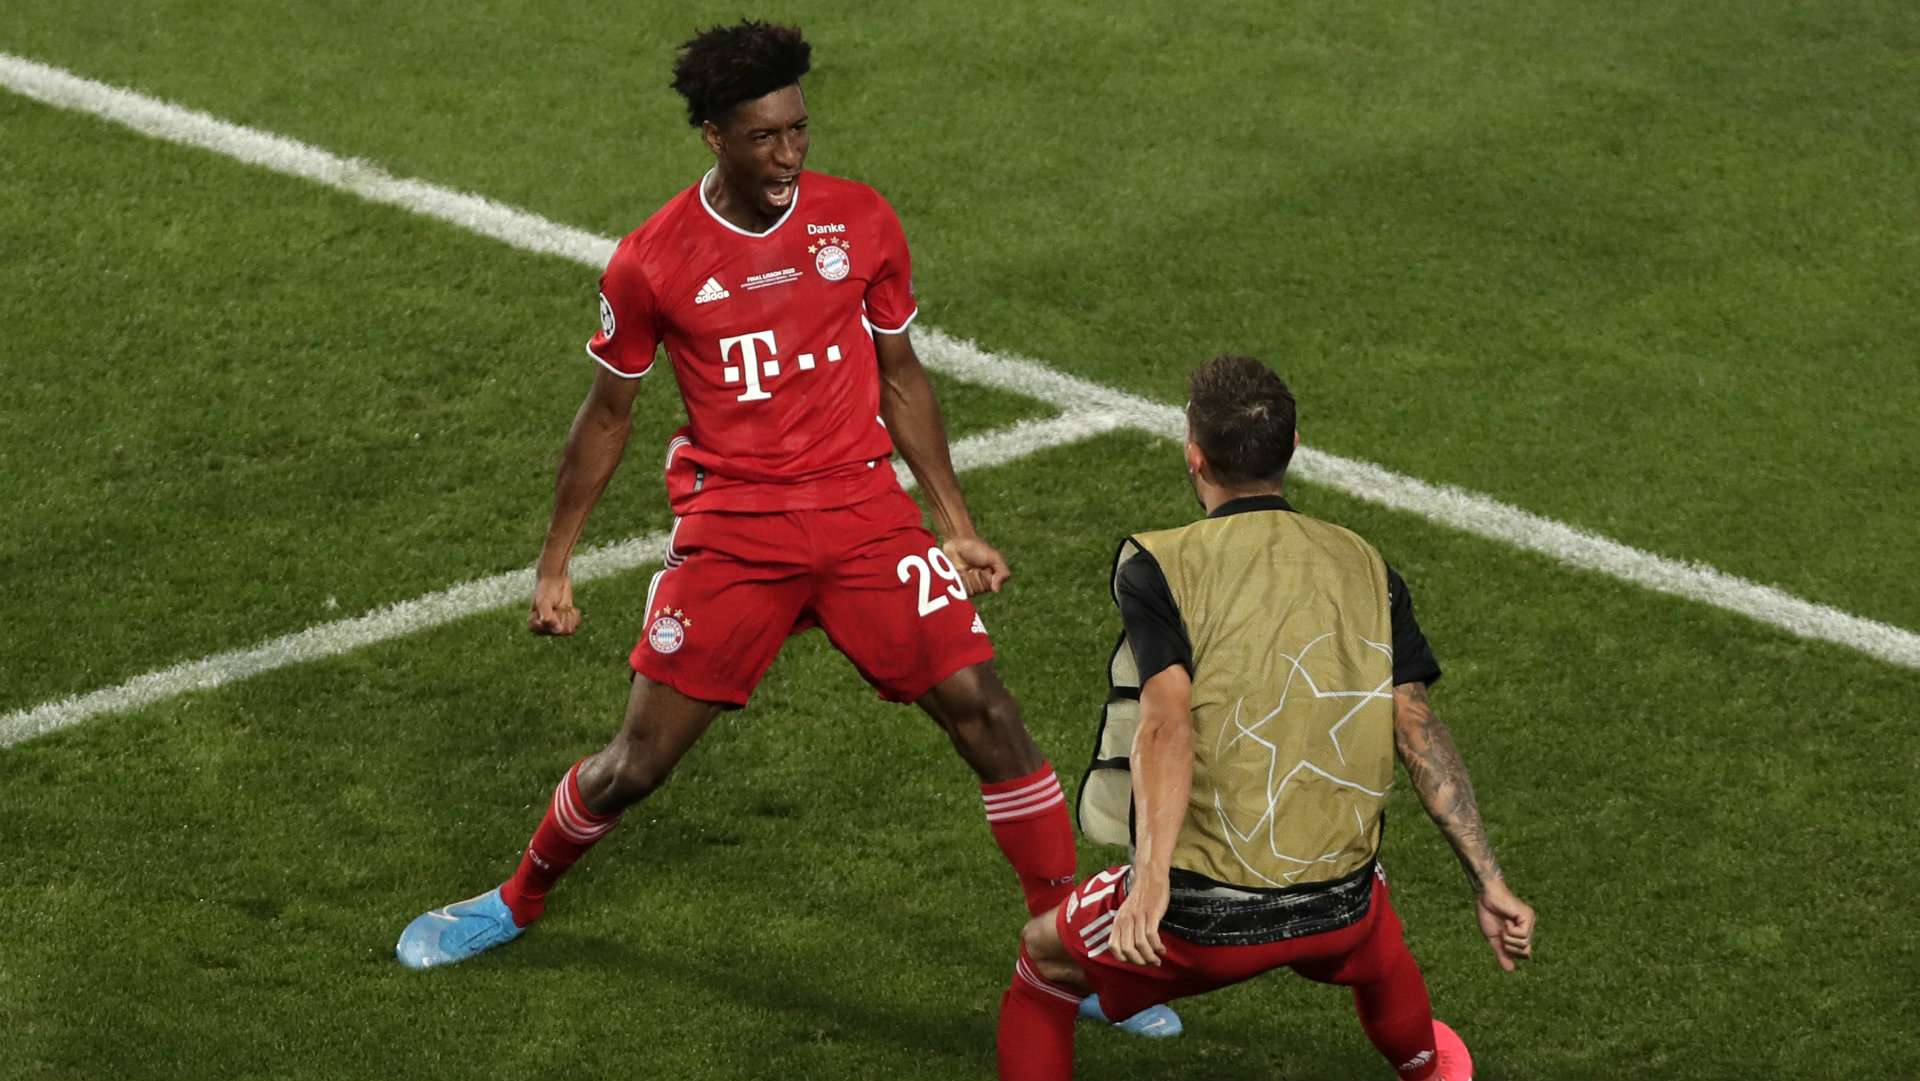 Kingsley Coman PSG vs Bayern Munich Champions League final 2019-20